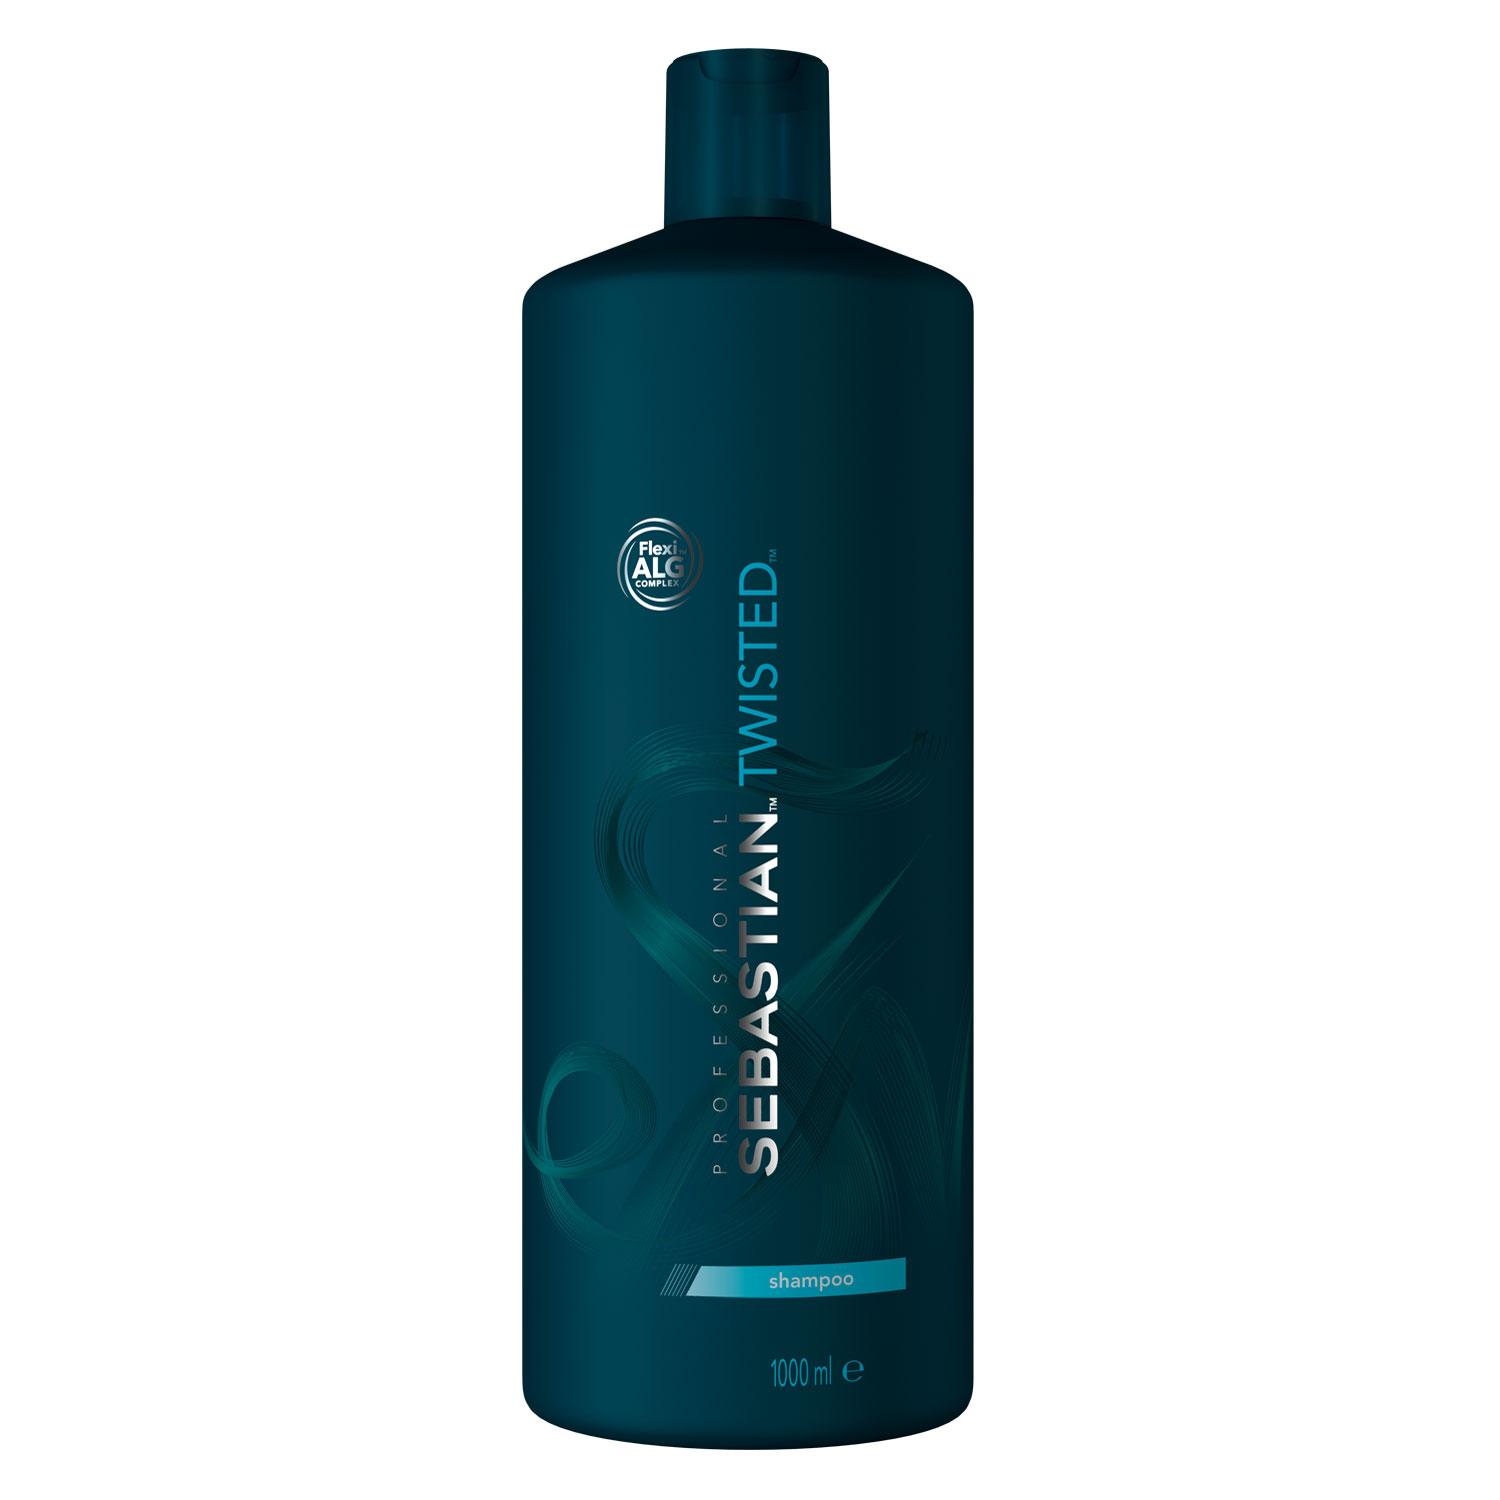 Twisted - Elastic Cleanser Shampoo